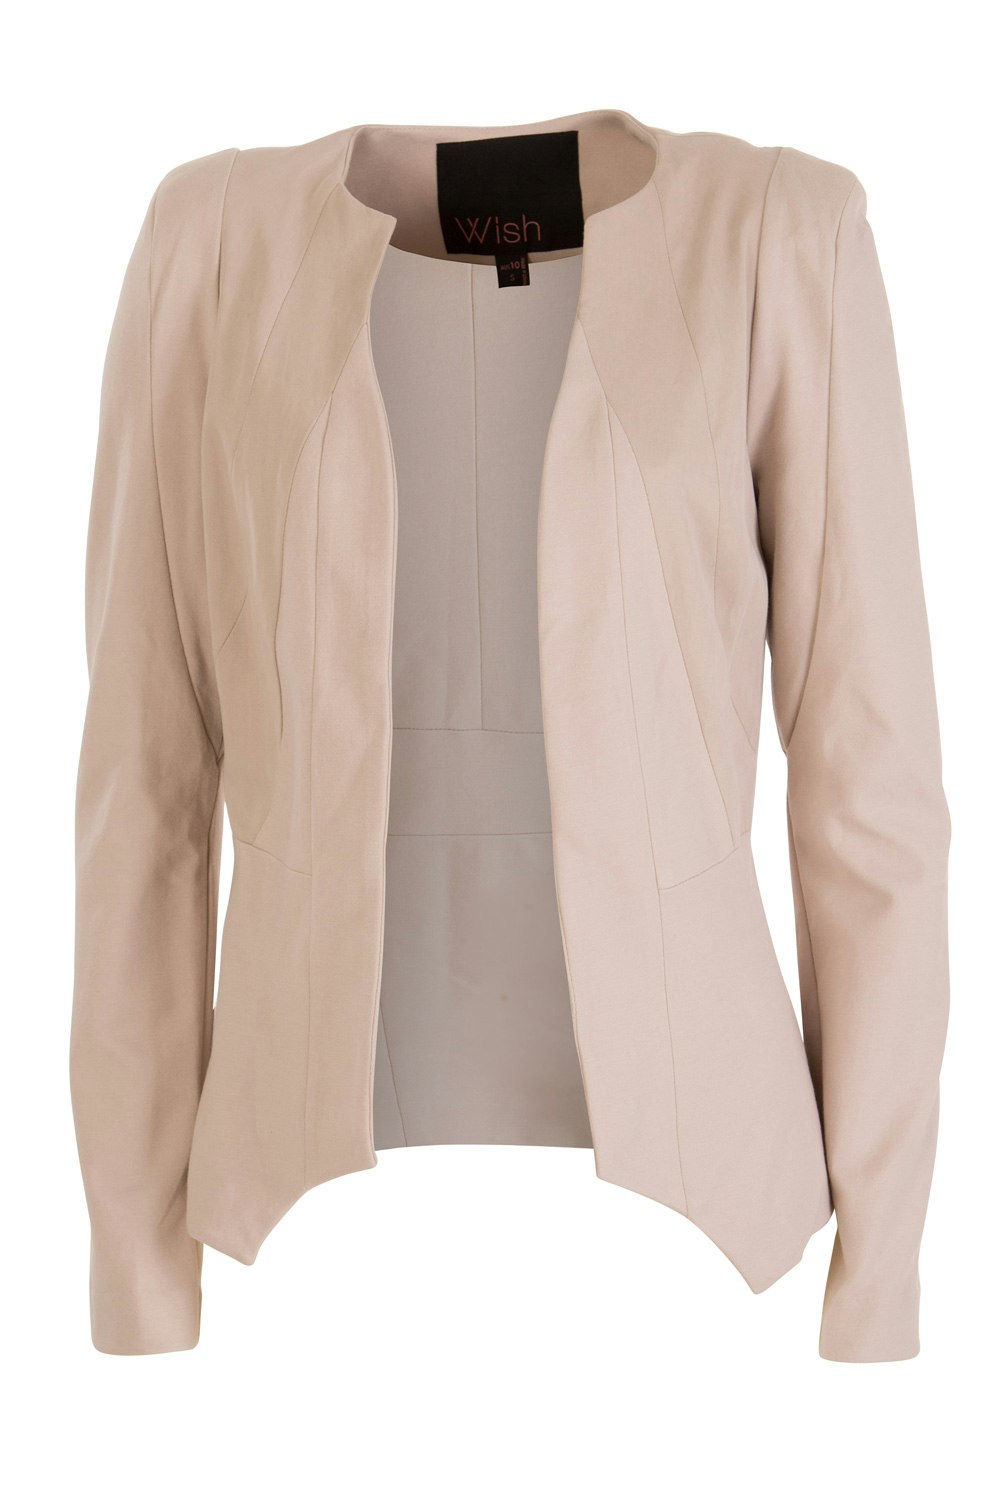 Wish fashion label clothing Persuit Jacket - Womens Blazers - Birdsnest ...